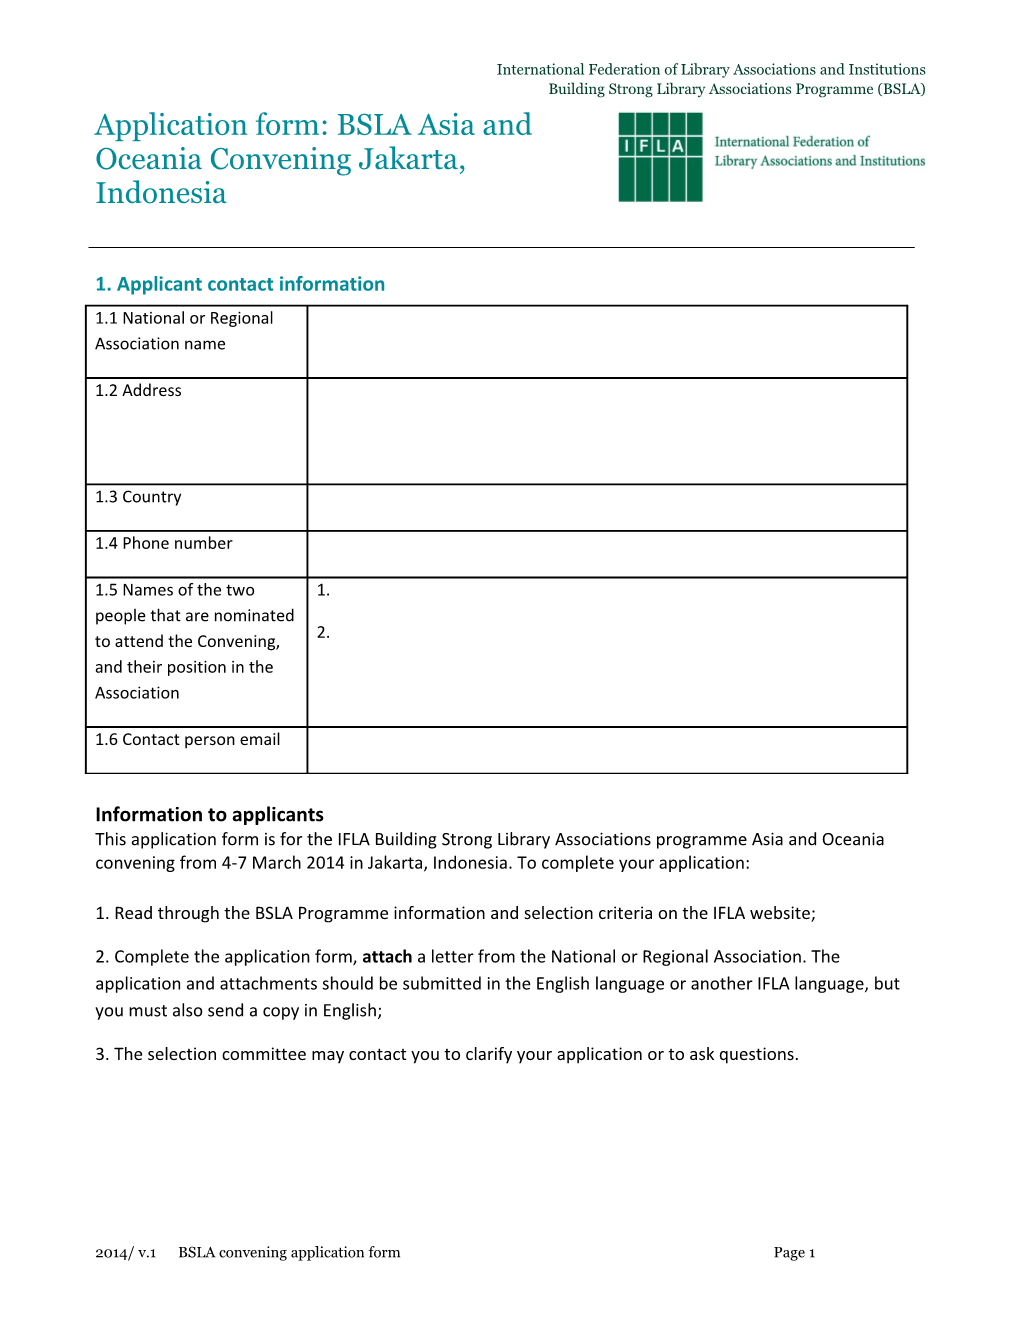 Application Form: BSLA Asia and Oceania Conveningjakarta, Indonesia